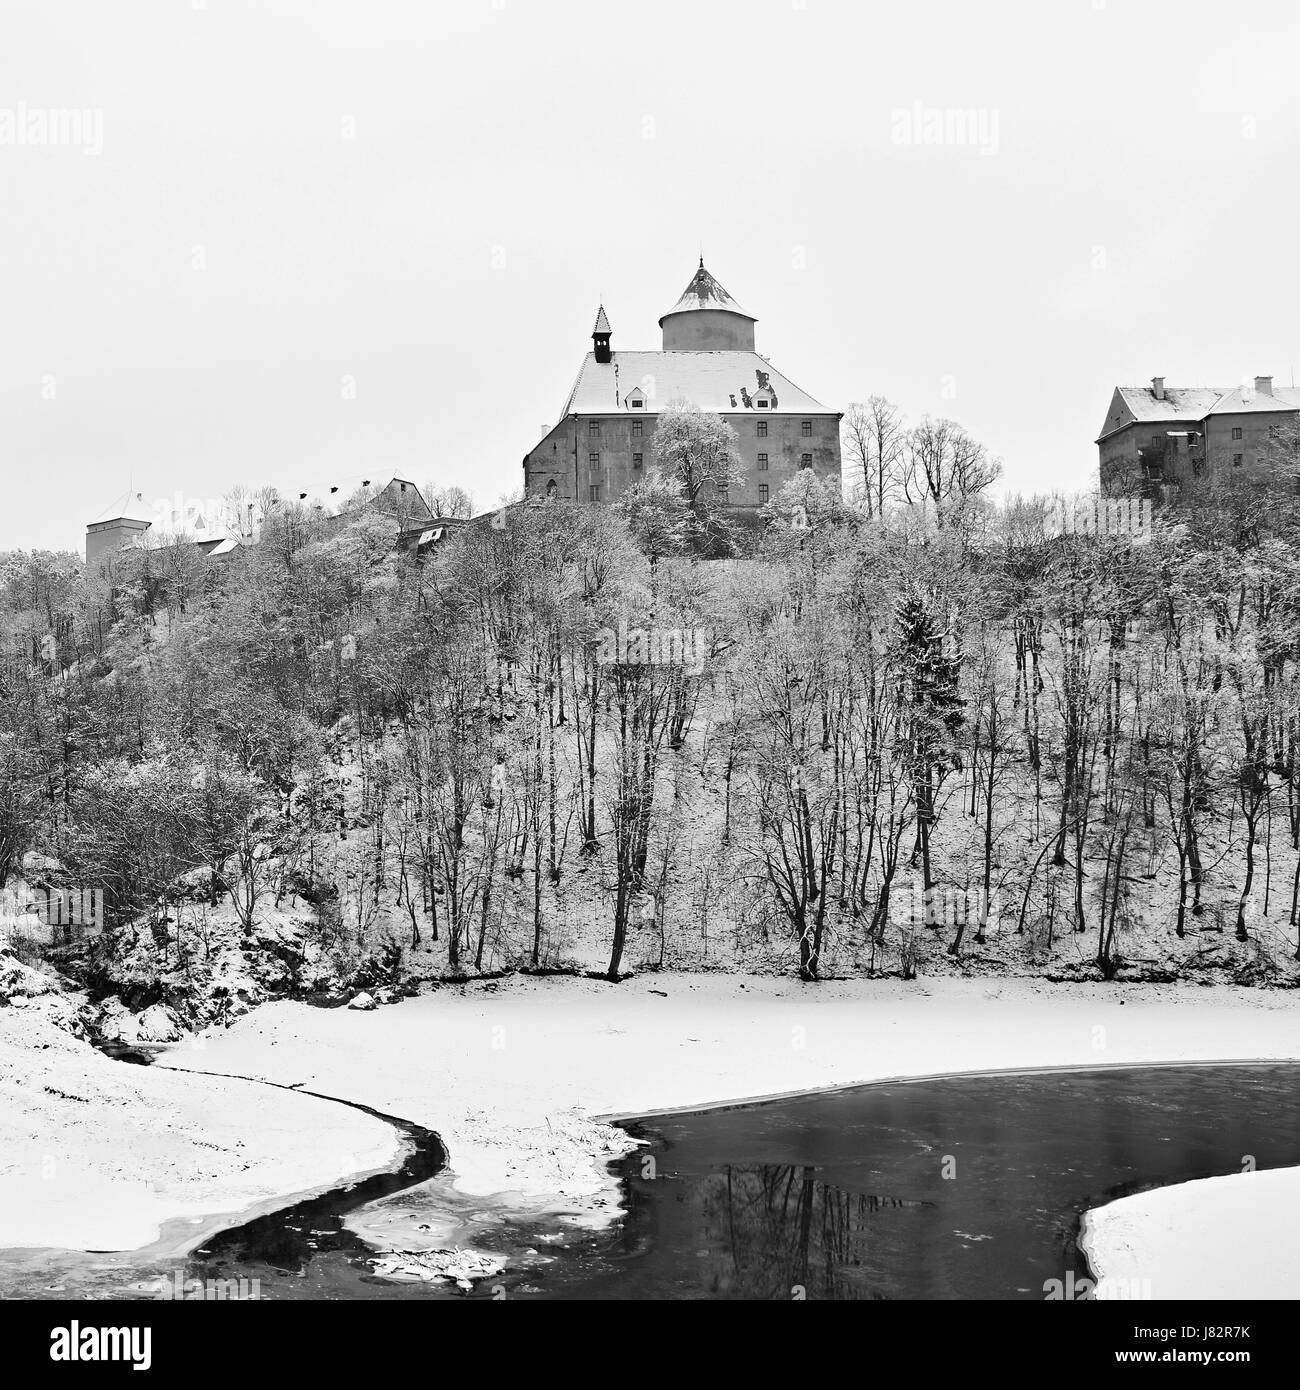 Winter landscape with a beautiful Gothic castle Veveri. Brno city - Czech Republic - Central Europe. Stock Photo